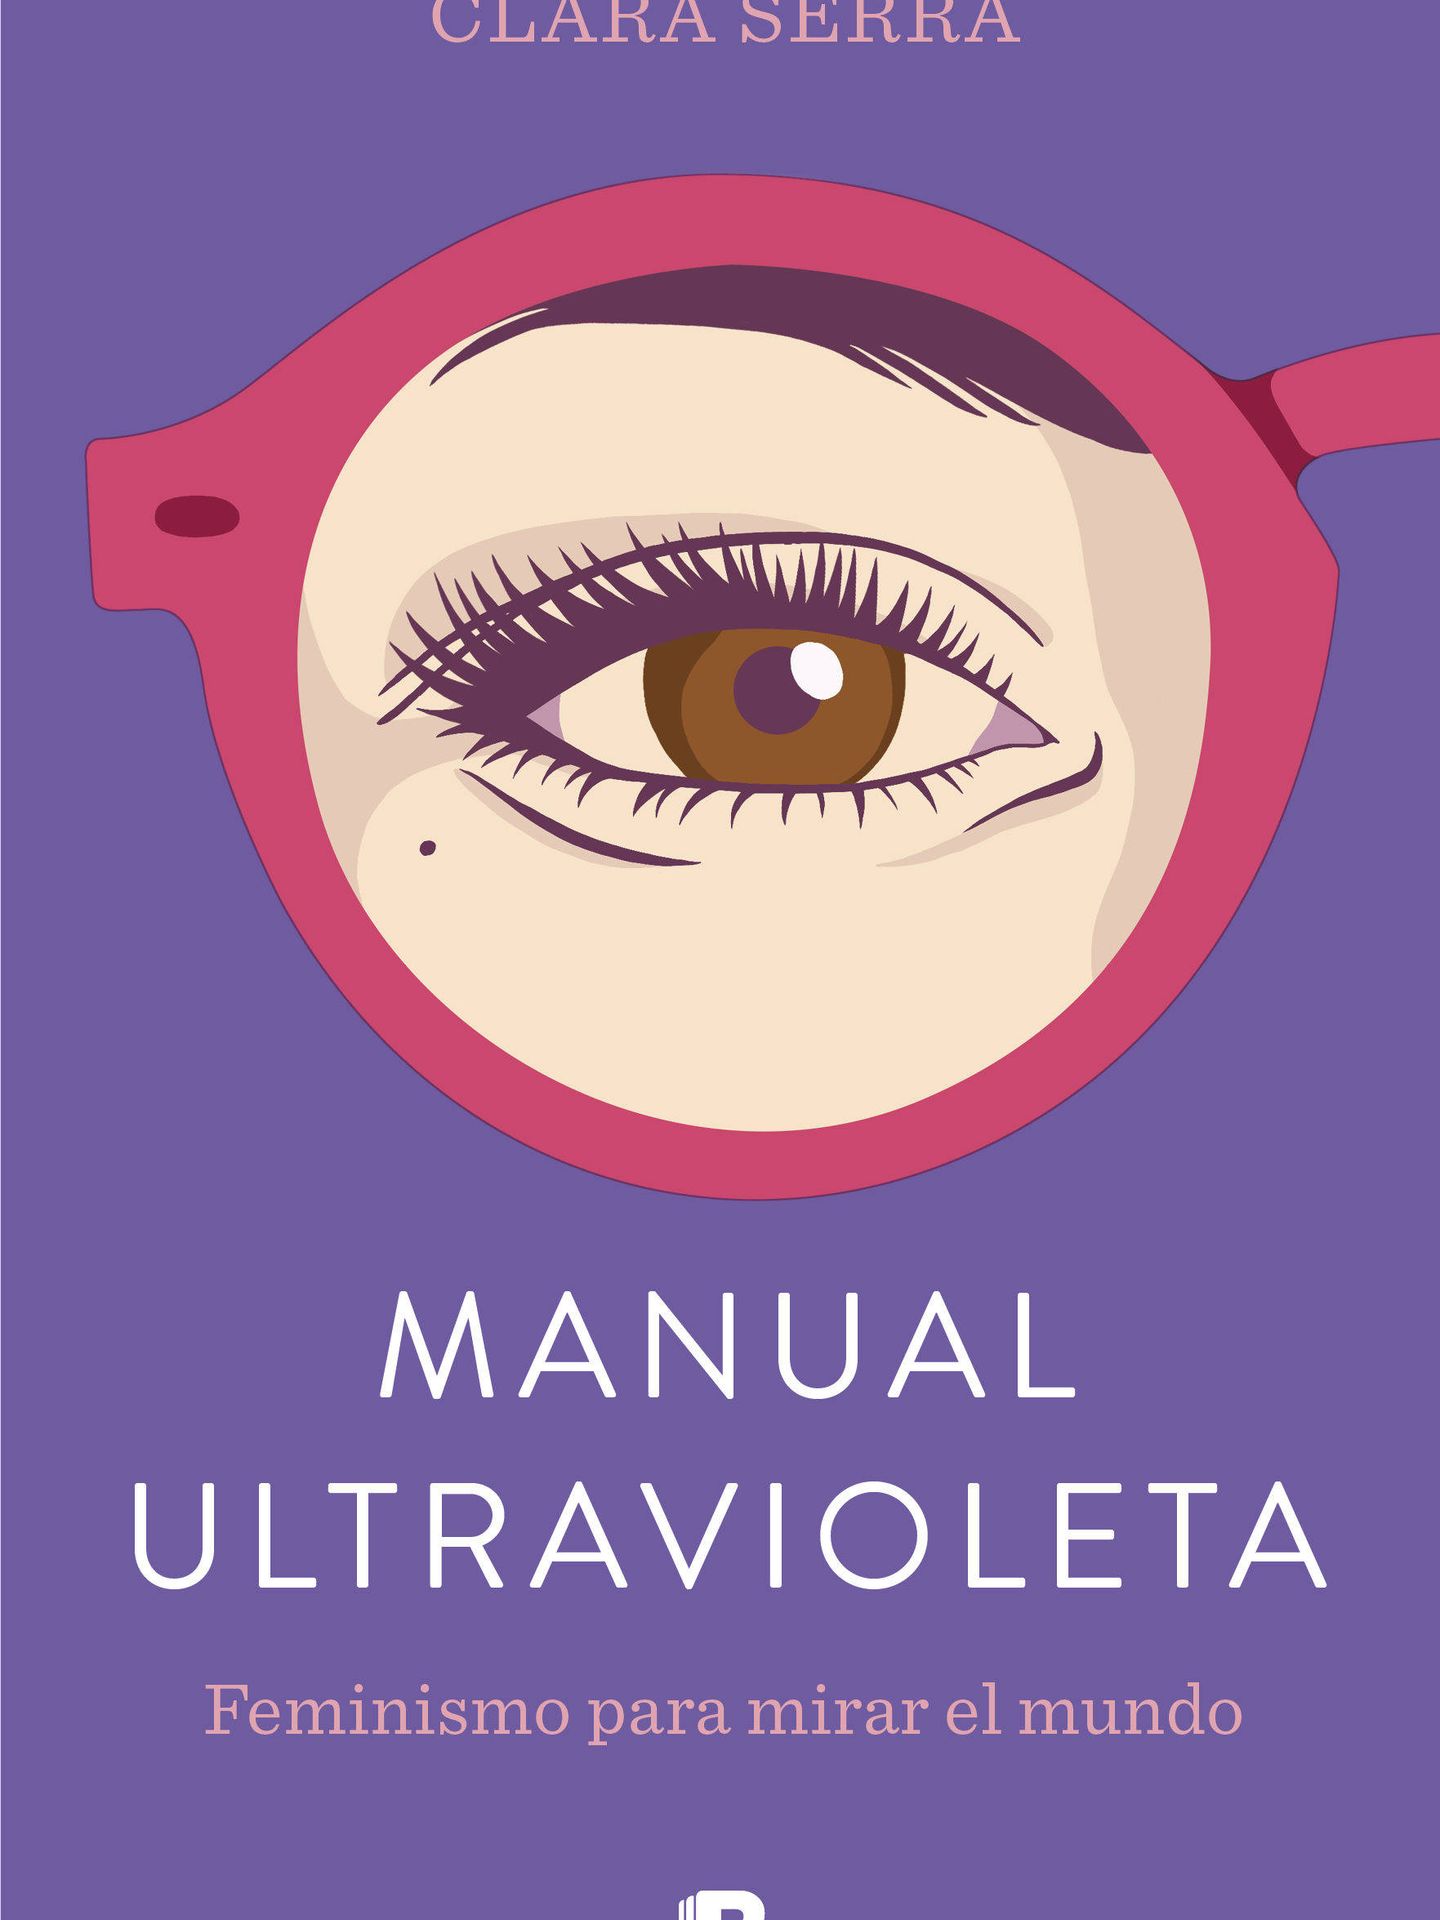 'Manual Ultravioleta' (Penguin Random House)